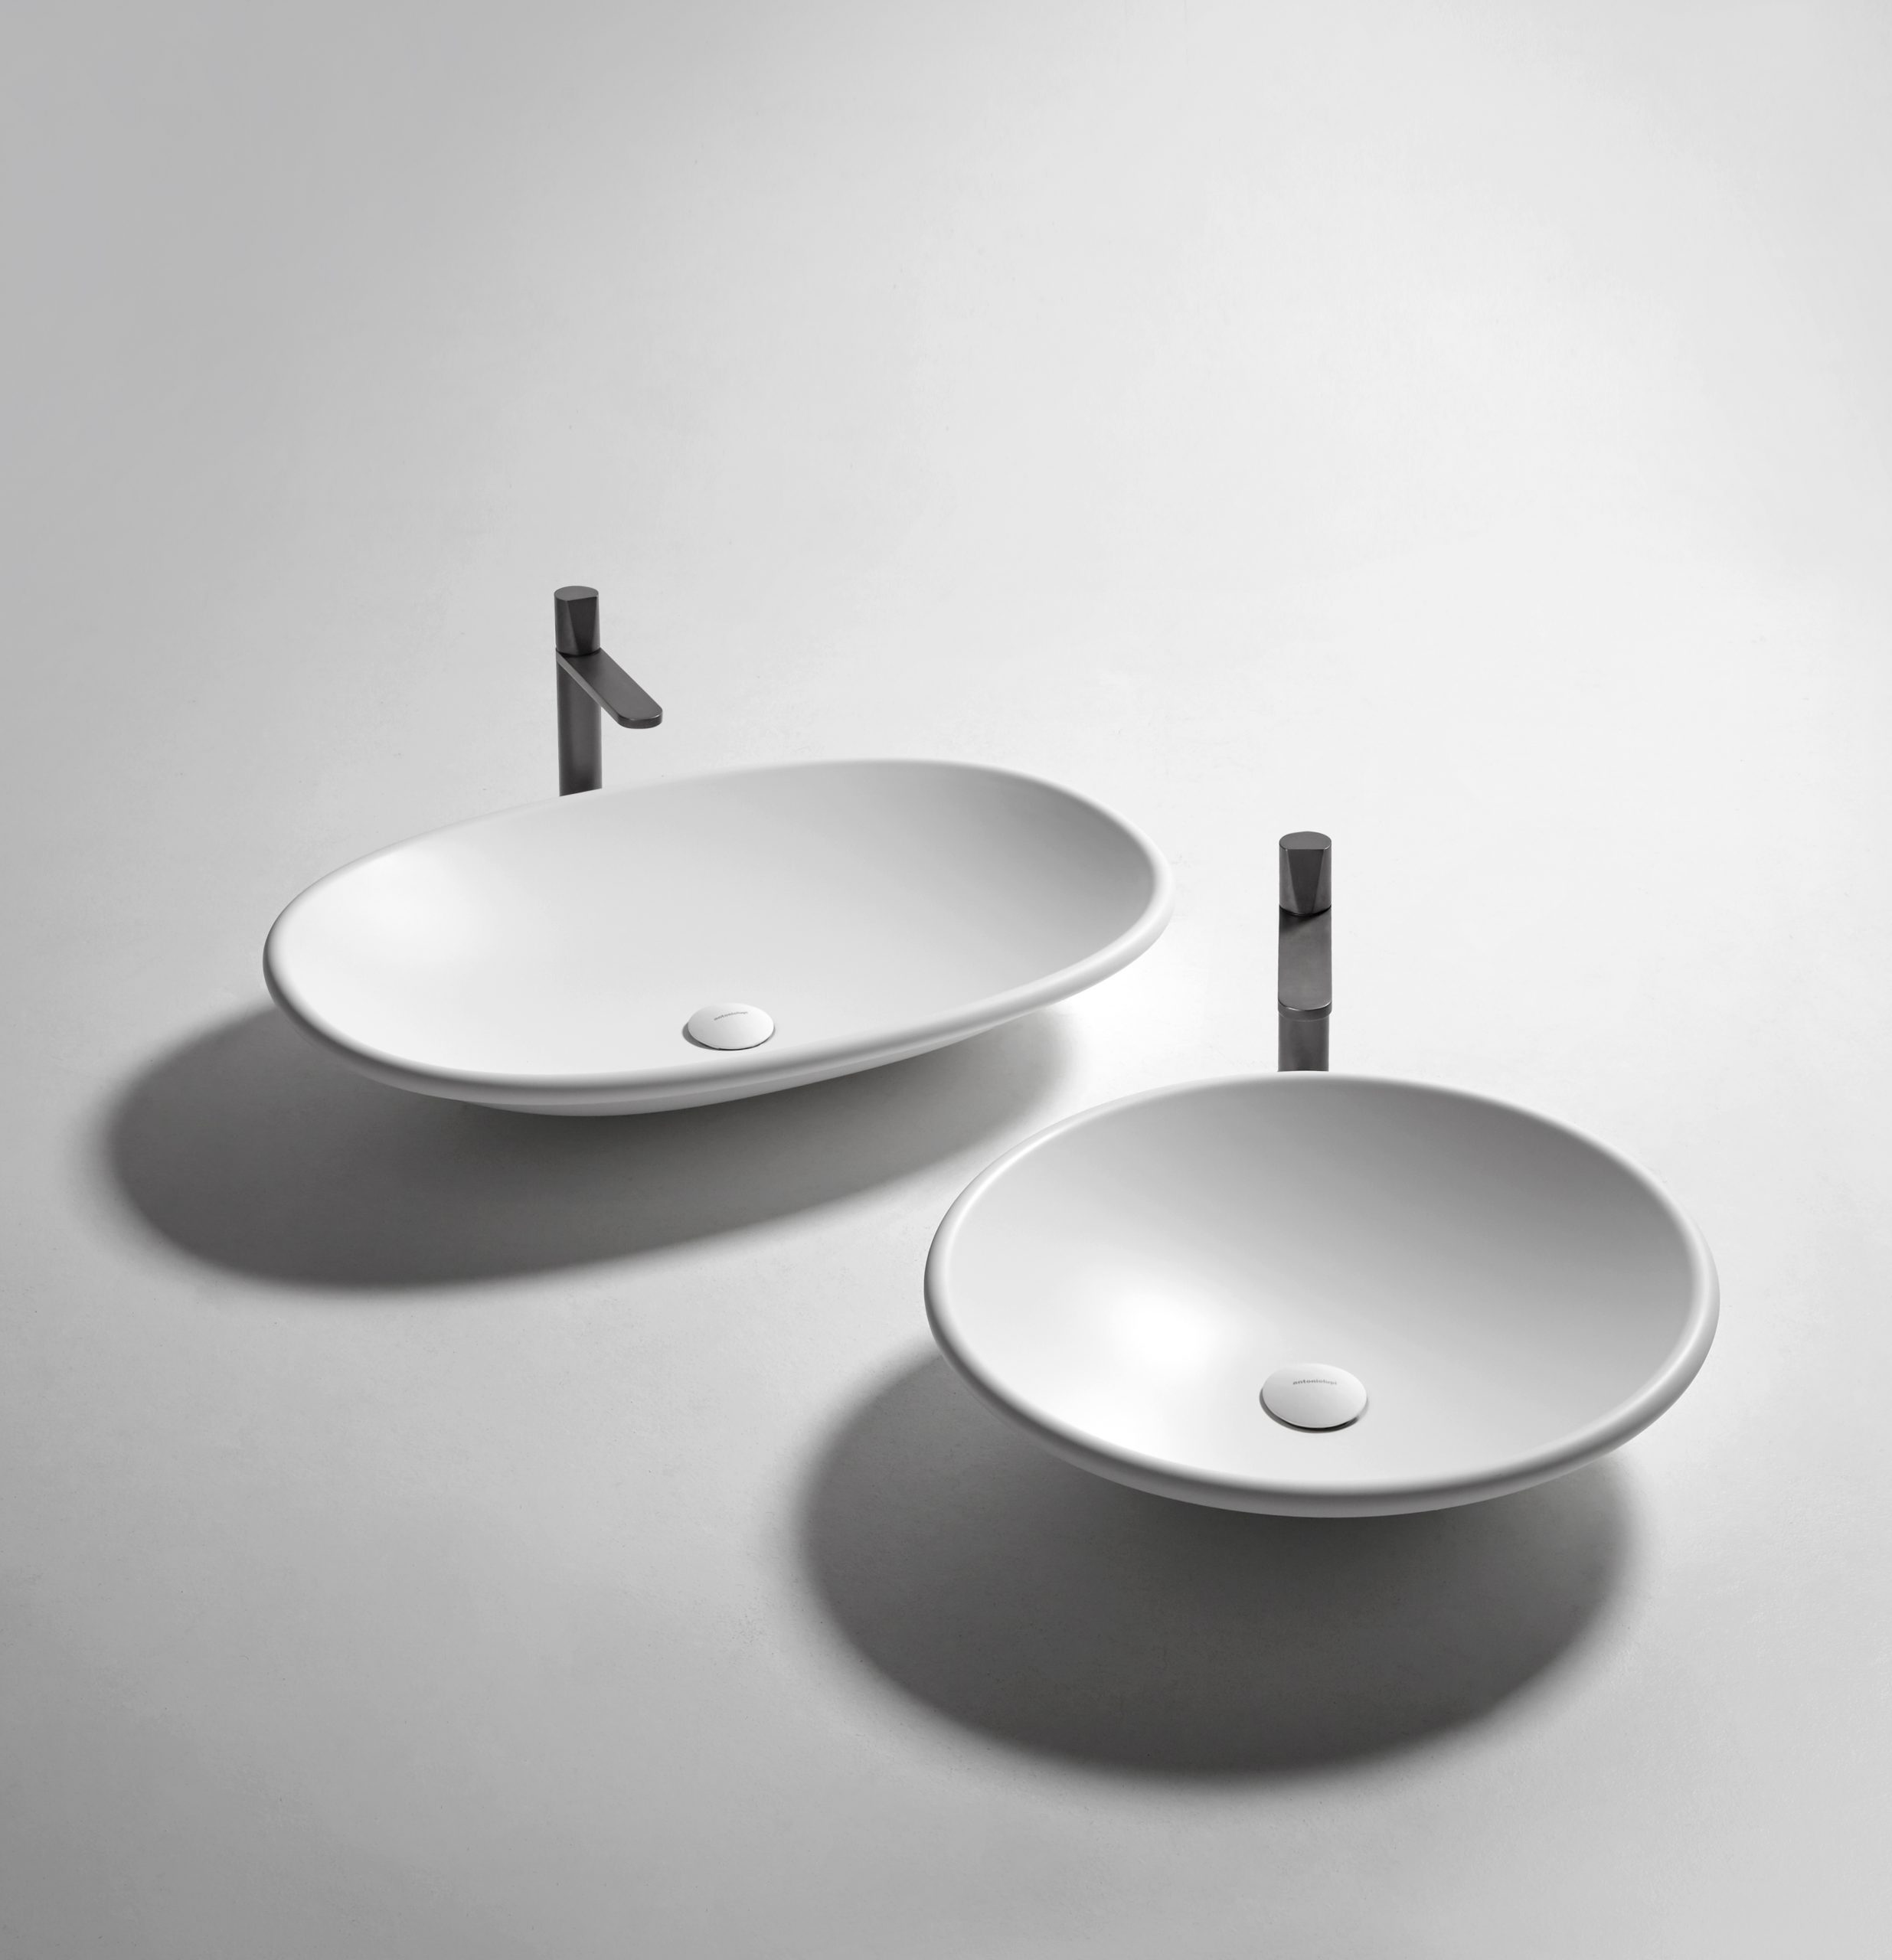 Rim Washbowls designed by Debiasi Sandri for Antoniolupi